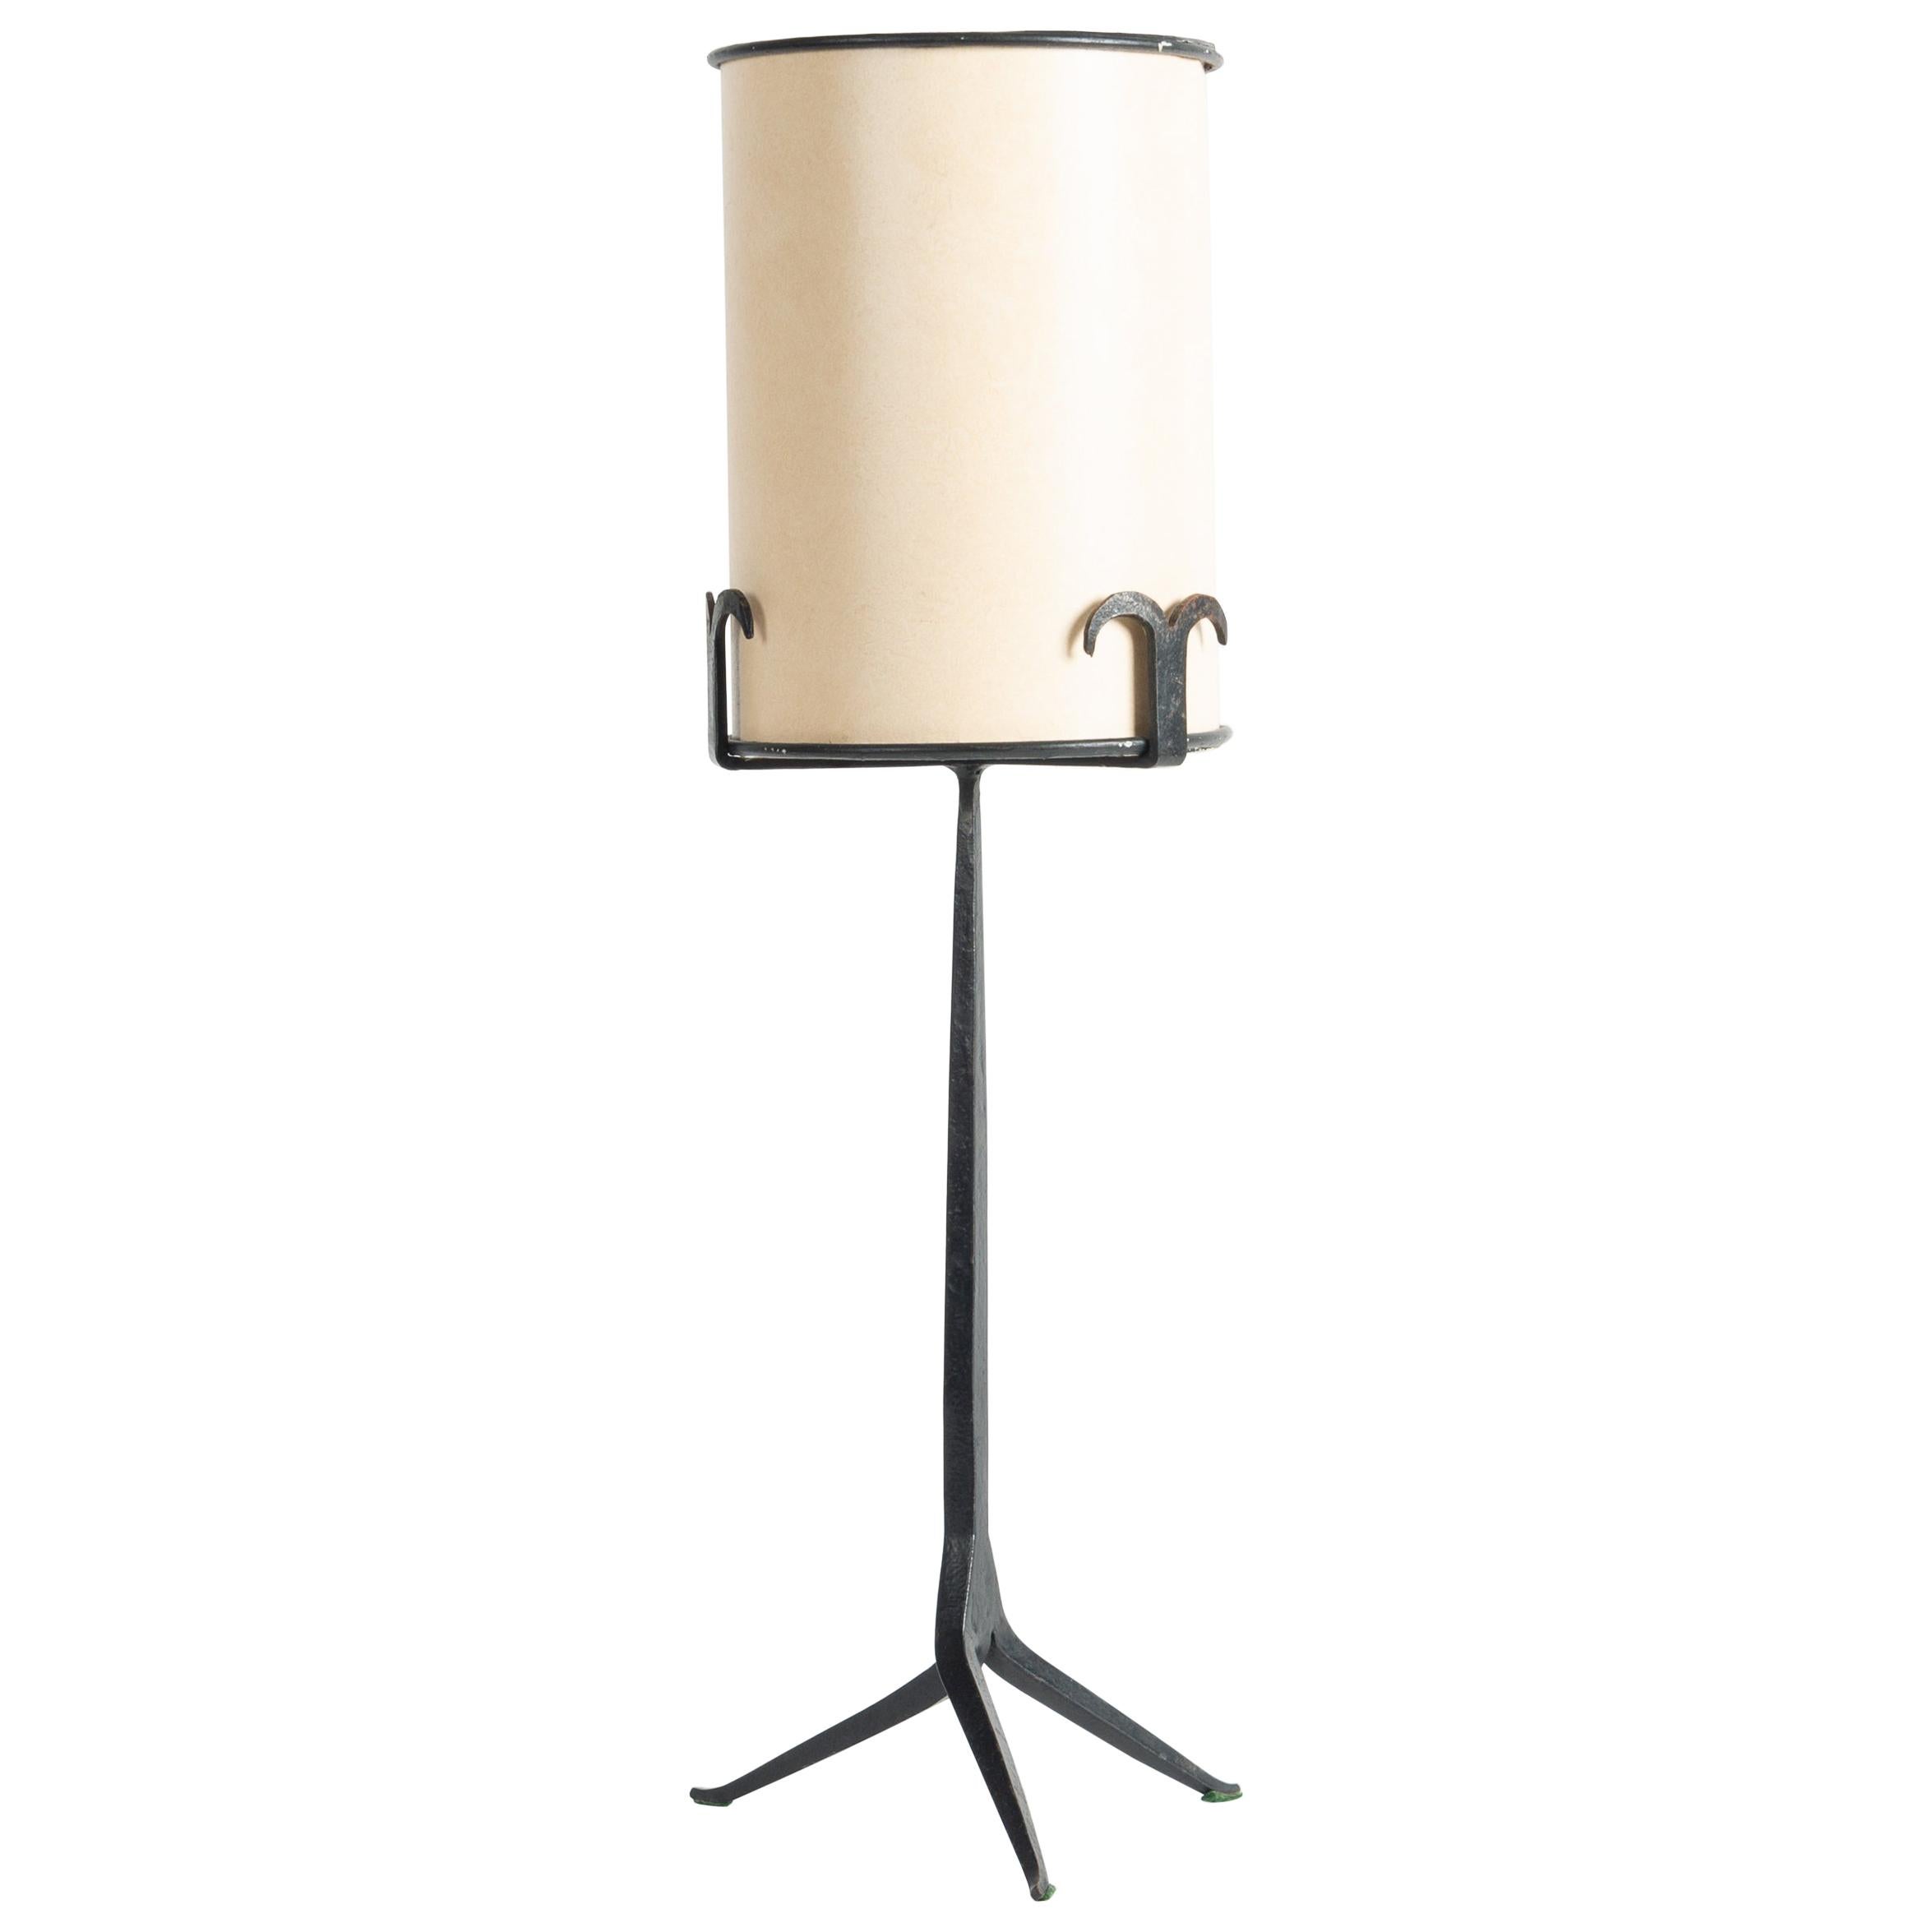 Jean Touret, Marolles Wrought-iron Tripodal Table Lamp, France, 1950-1955